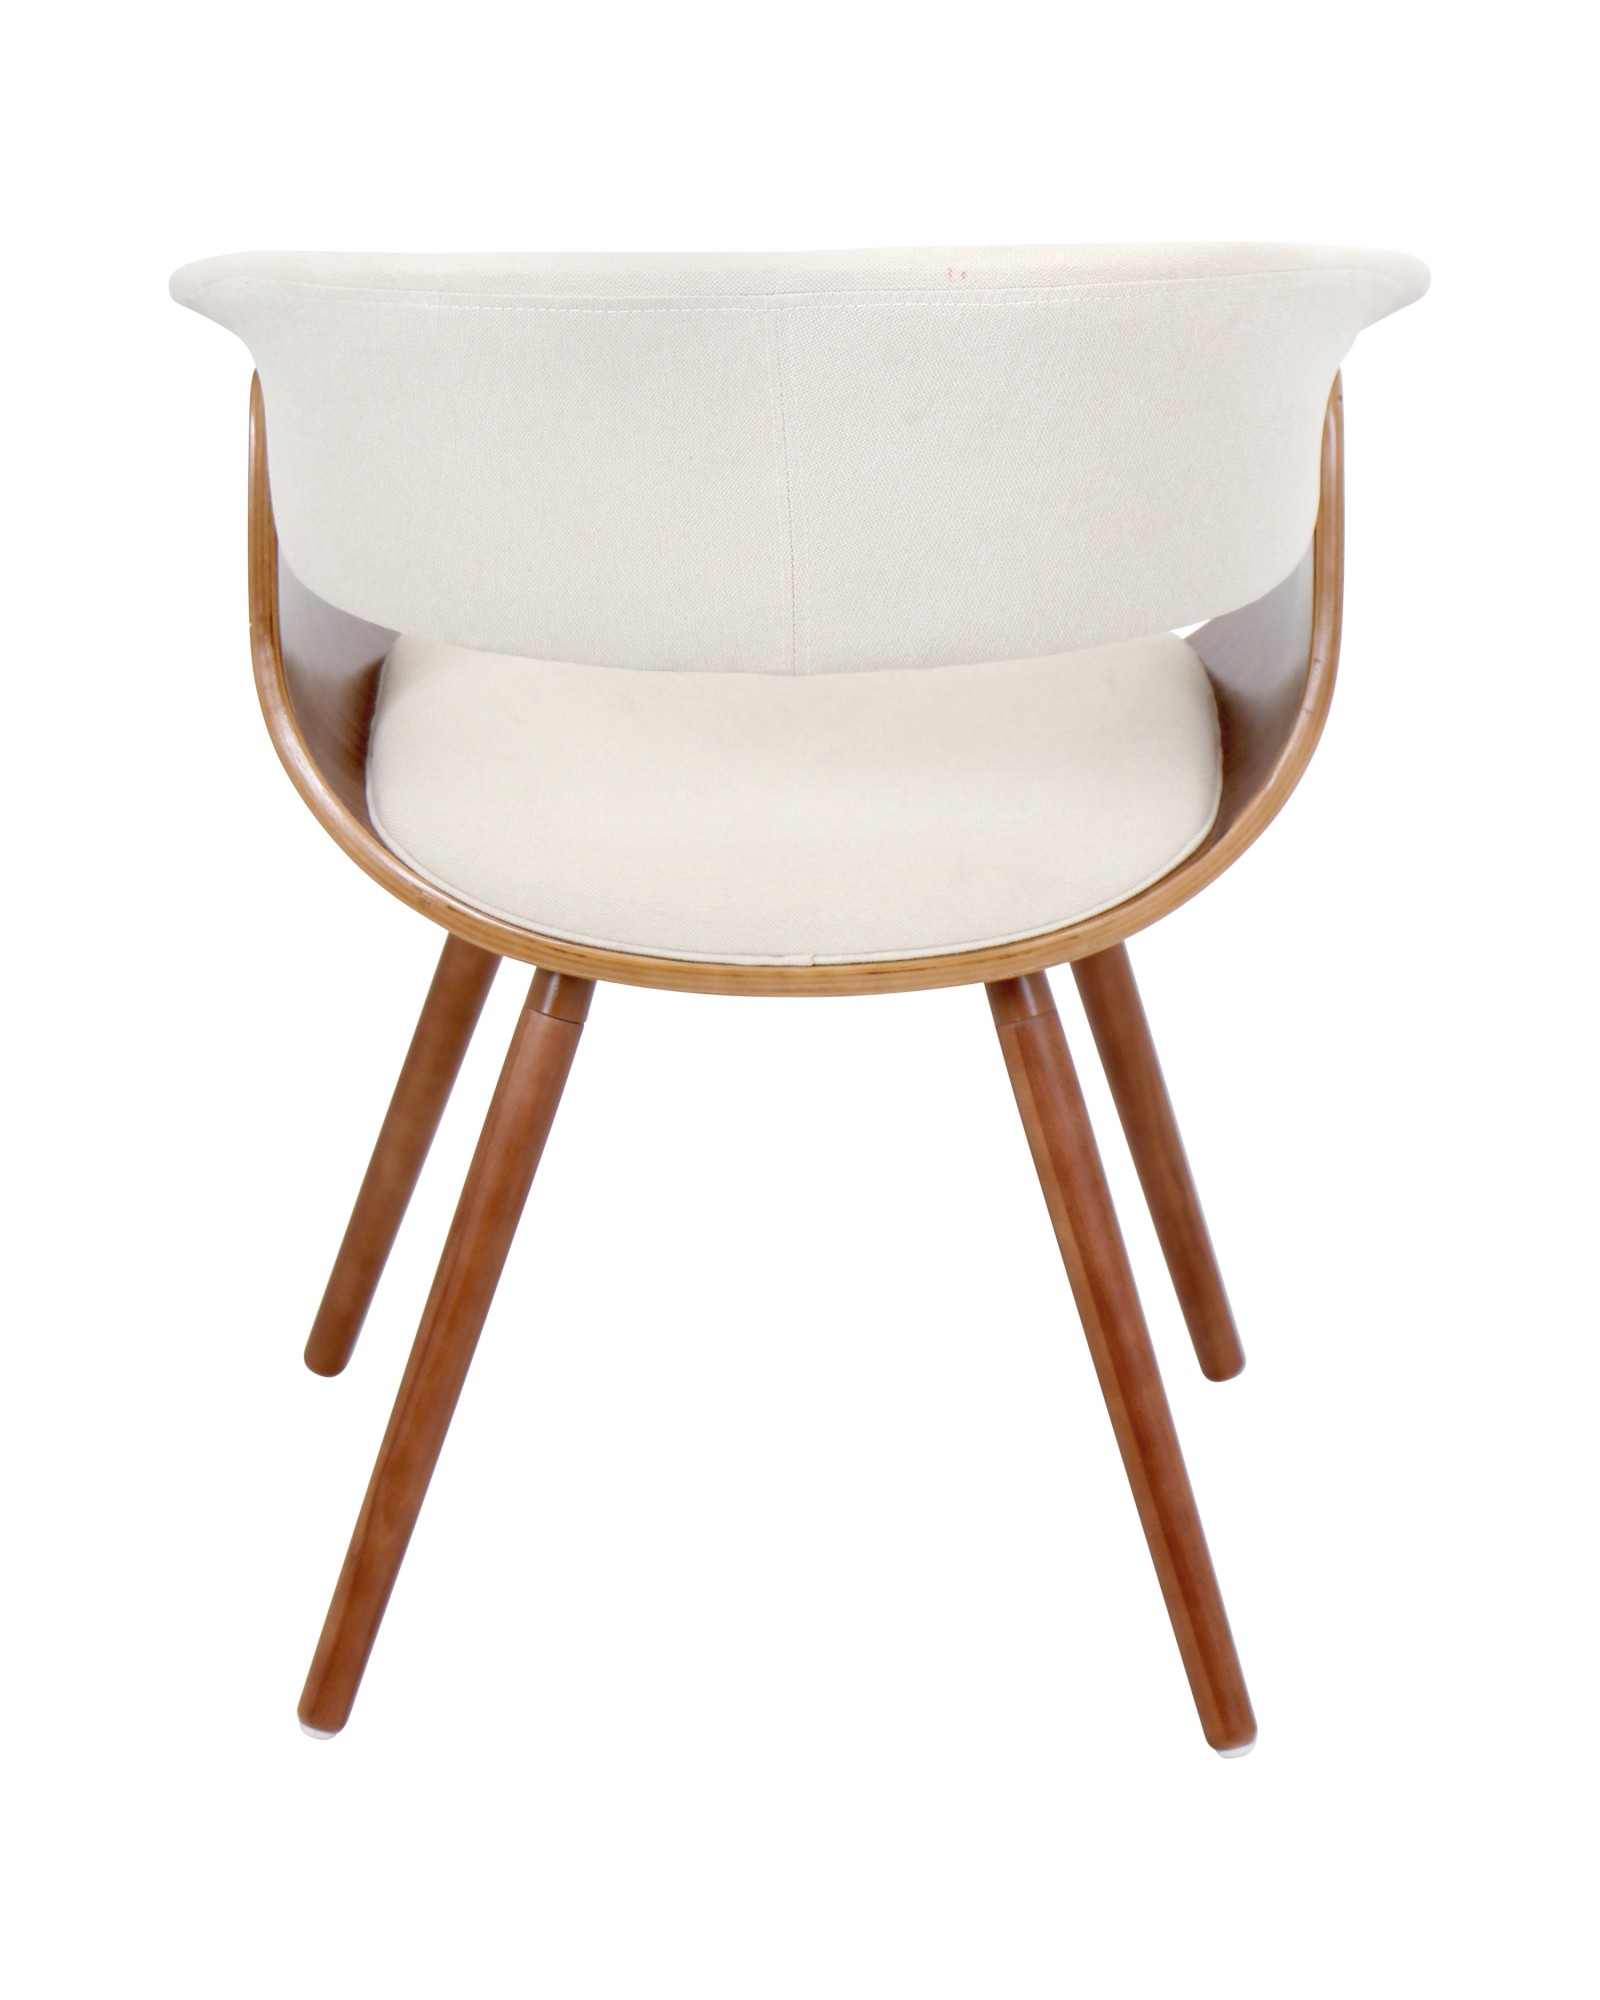 Vintage Mod Mid-Century Modern Chair in Walnut and Cream Fabric